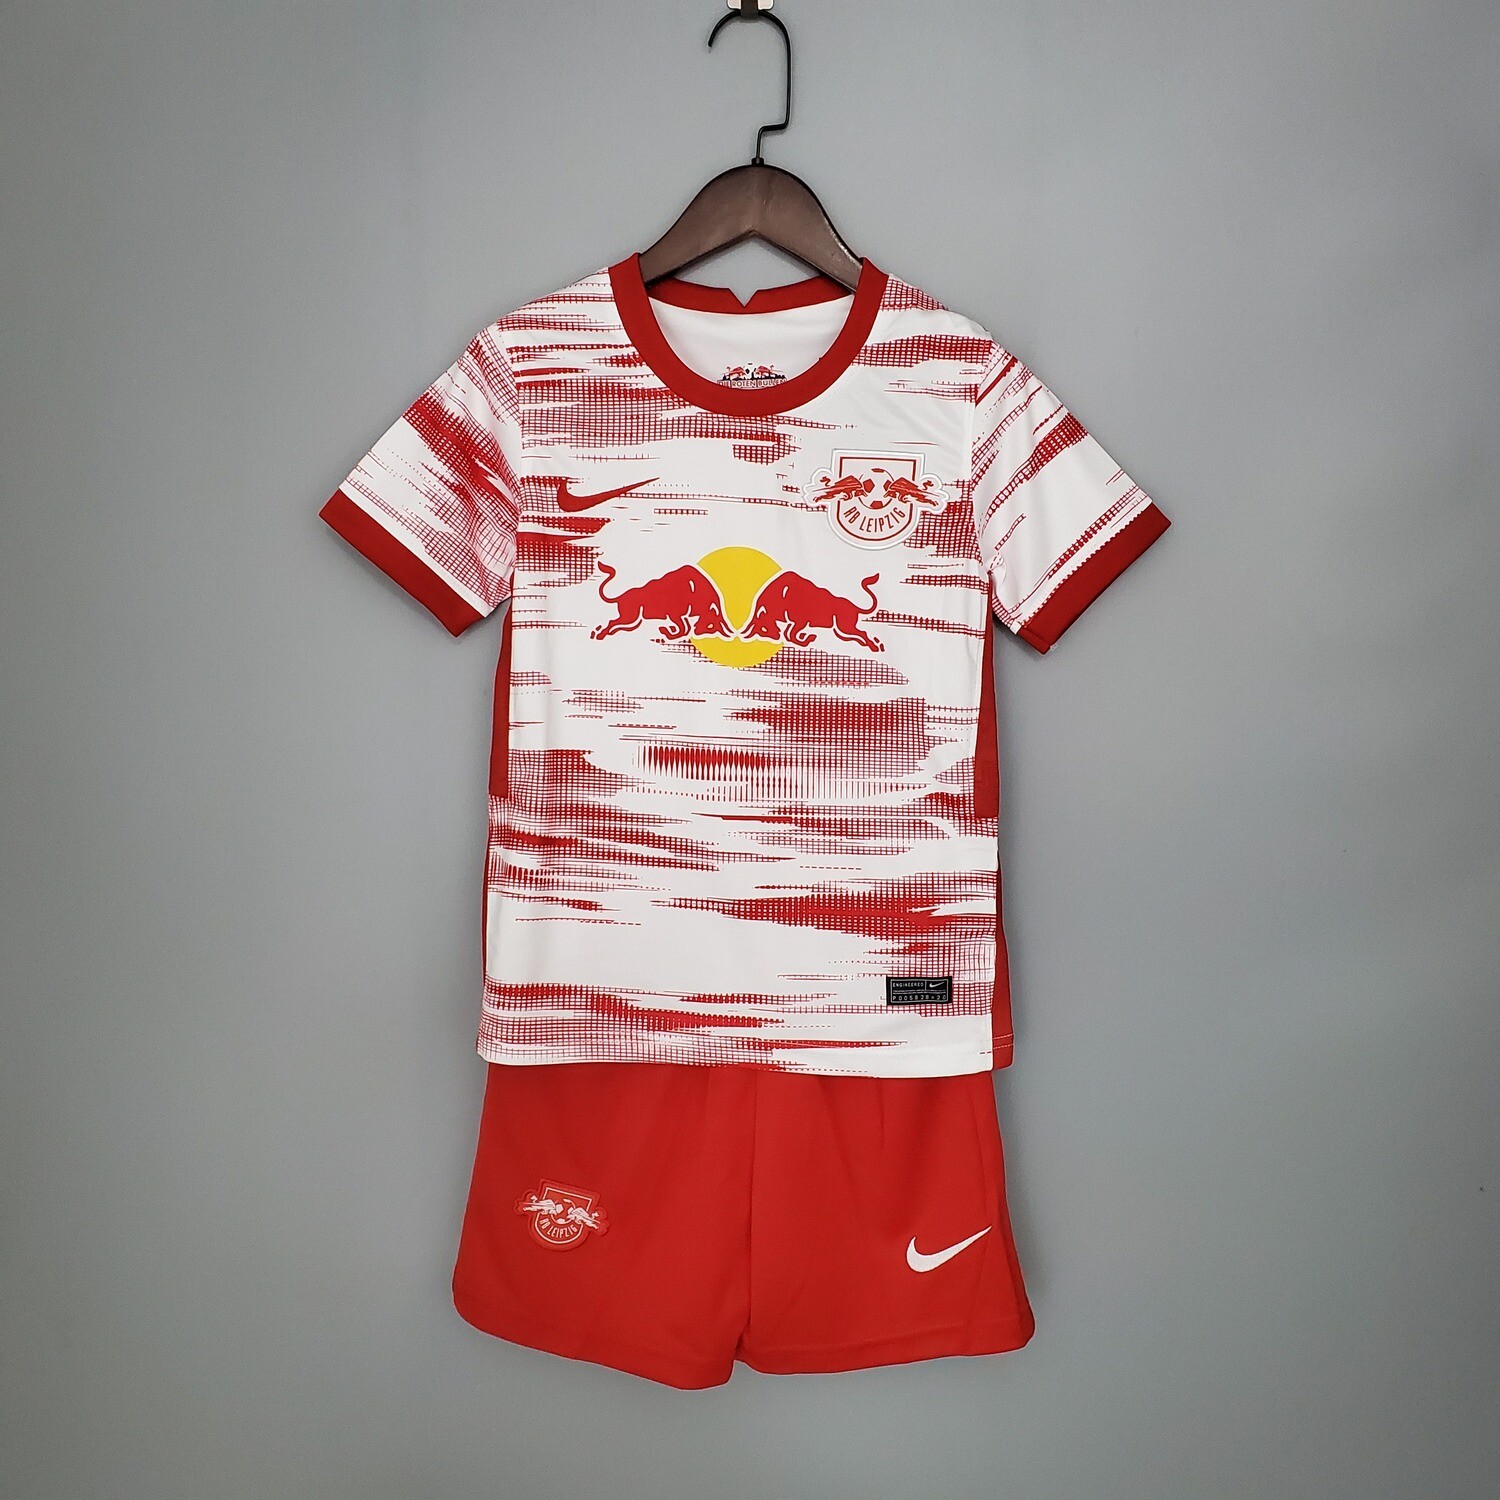 kit Camisa Infantil RB Leipzig Uniforme titular 21/22 (Home kit)